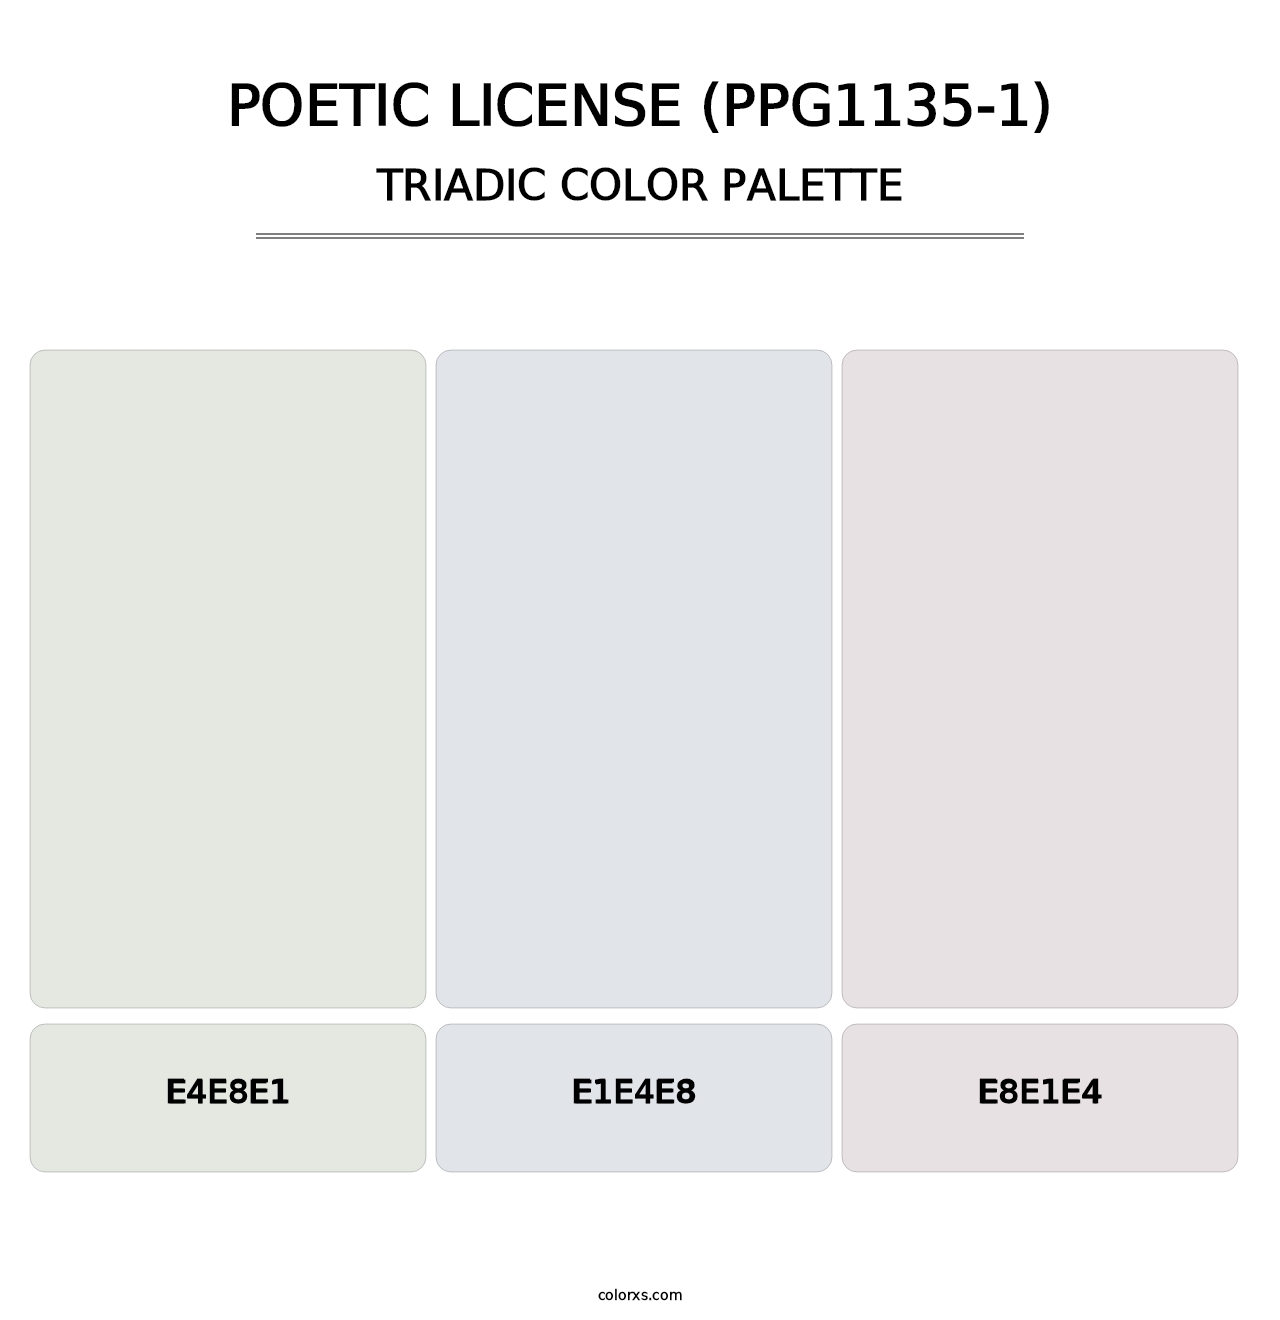 Poetic License (PPG1135-1) - Triadic Color Palette